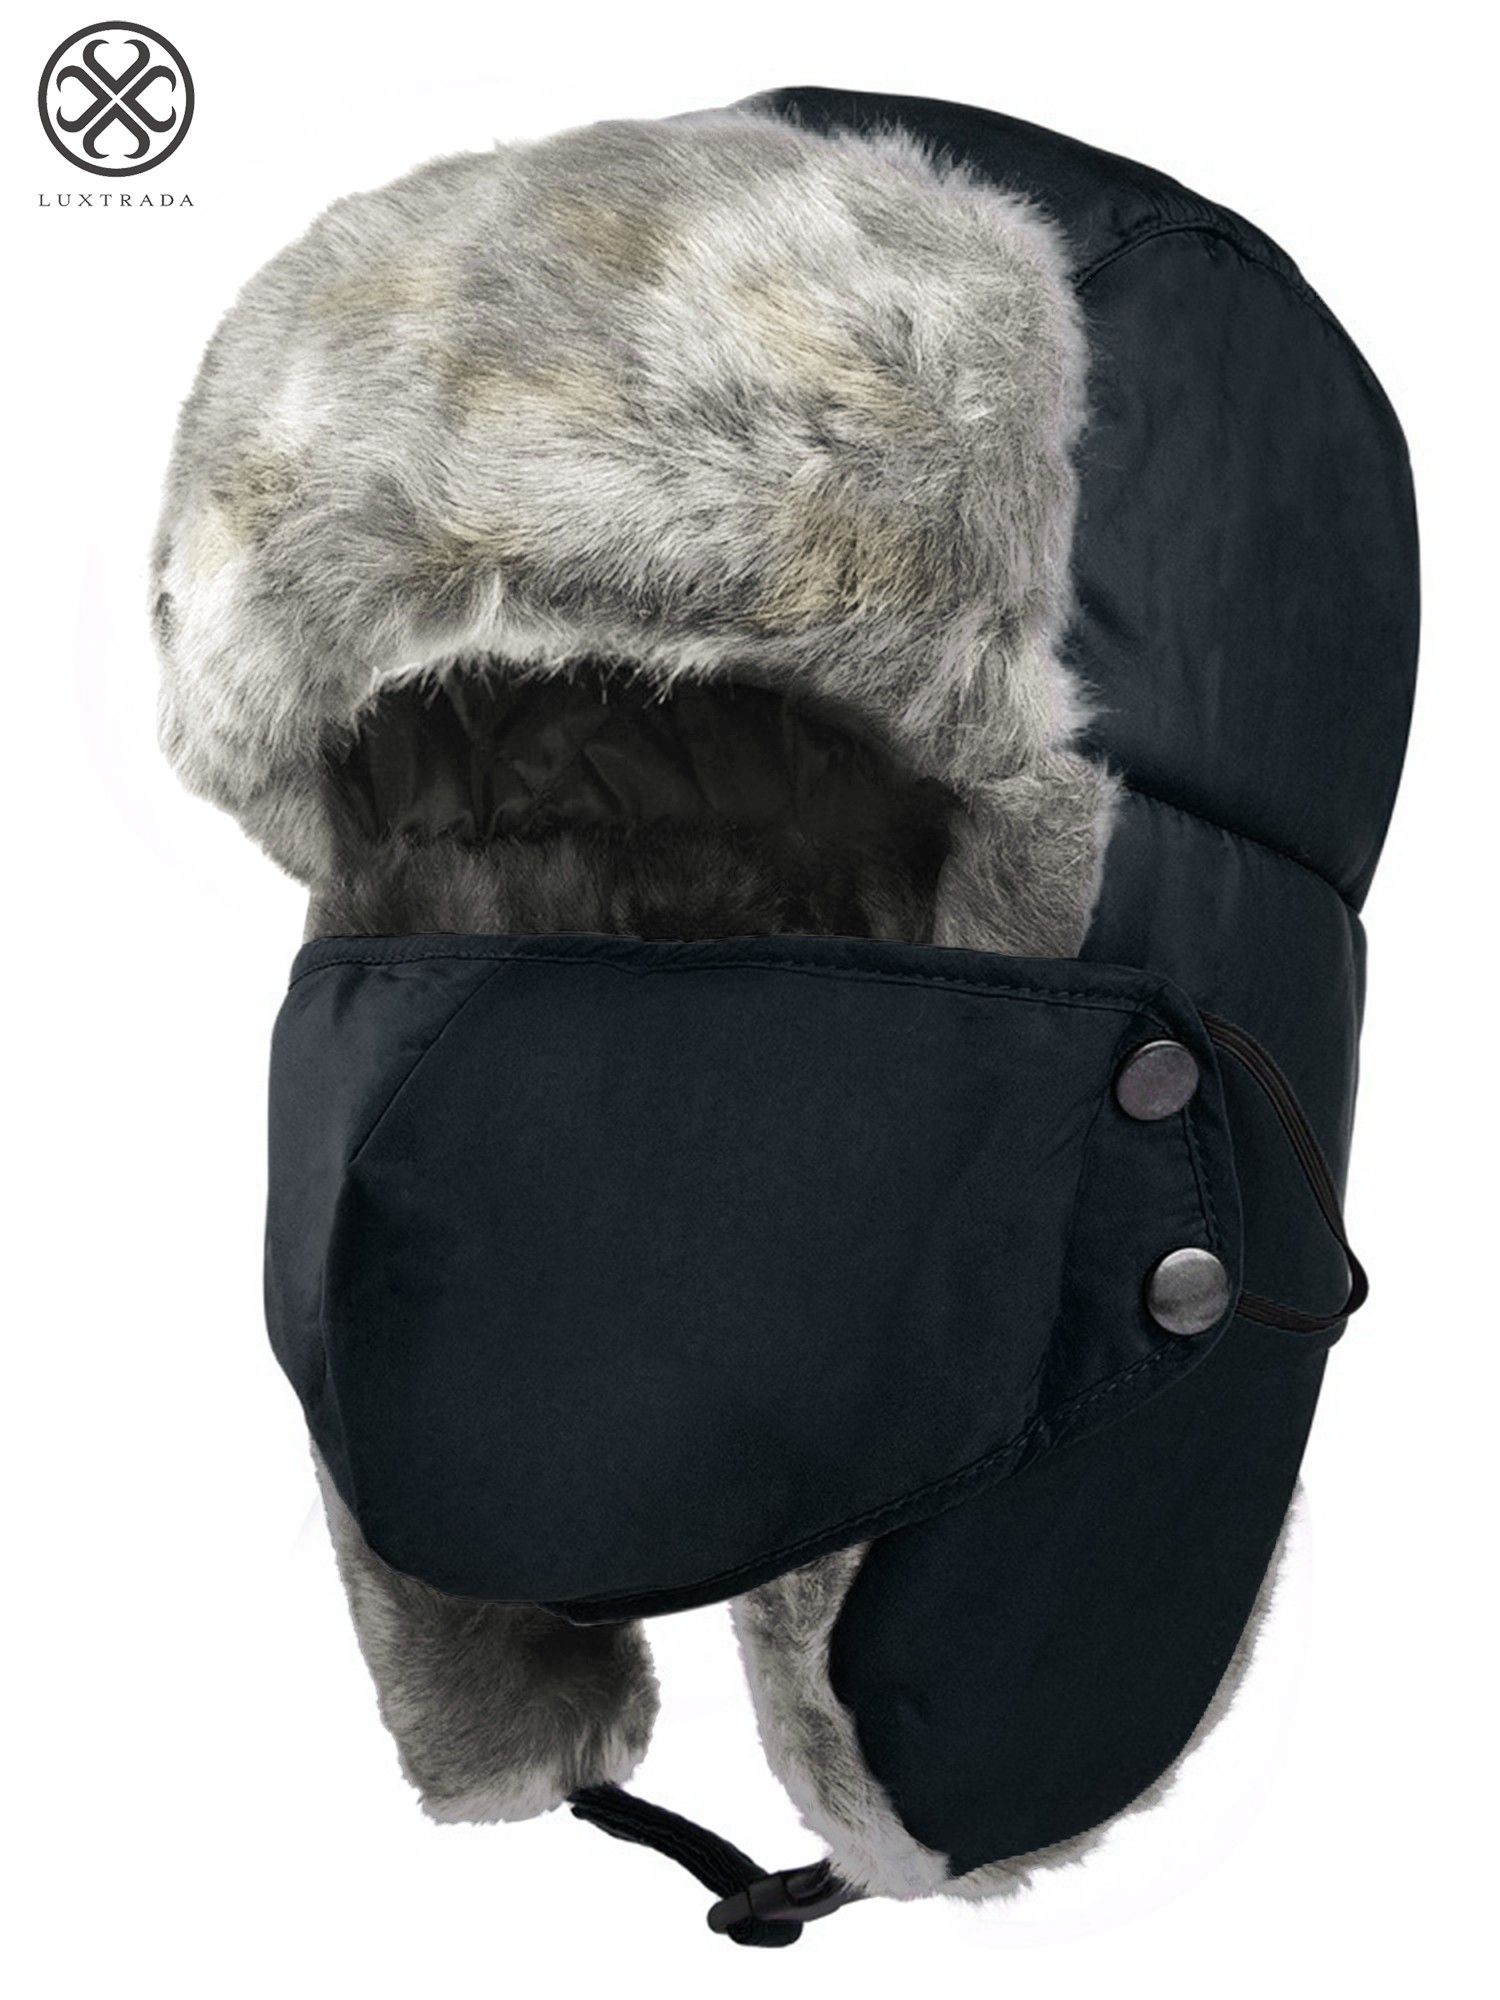 Luxtrada Winter Hats for Men and Women Trooper Hunting Hat Ushanka Hat Ski Hat with Ear Flaps Windproof Waterproof Warm Hat (Black) - image 2 of 10